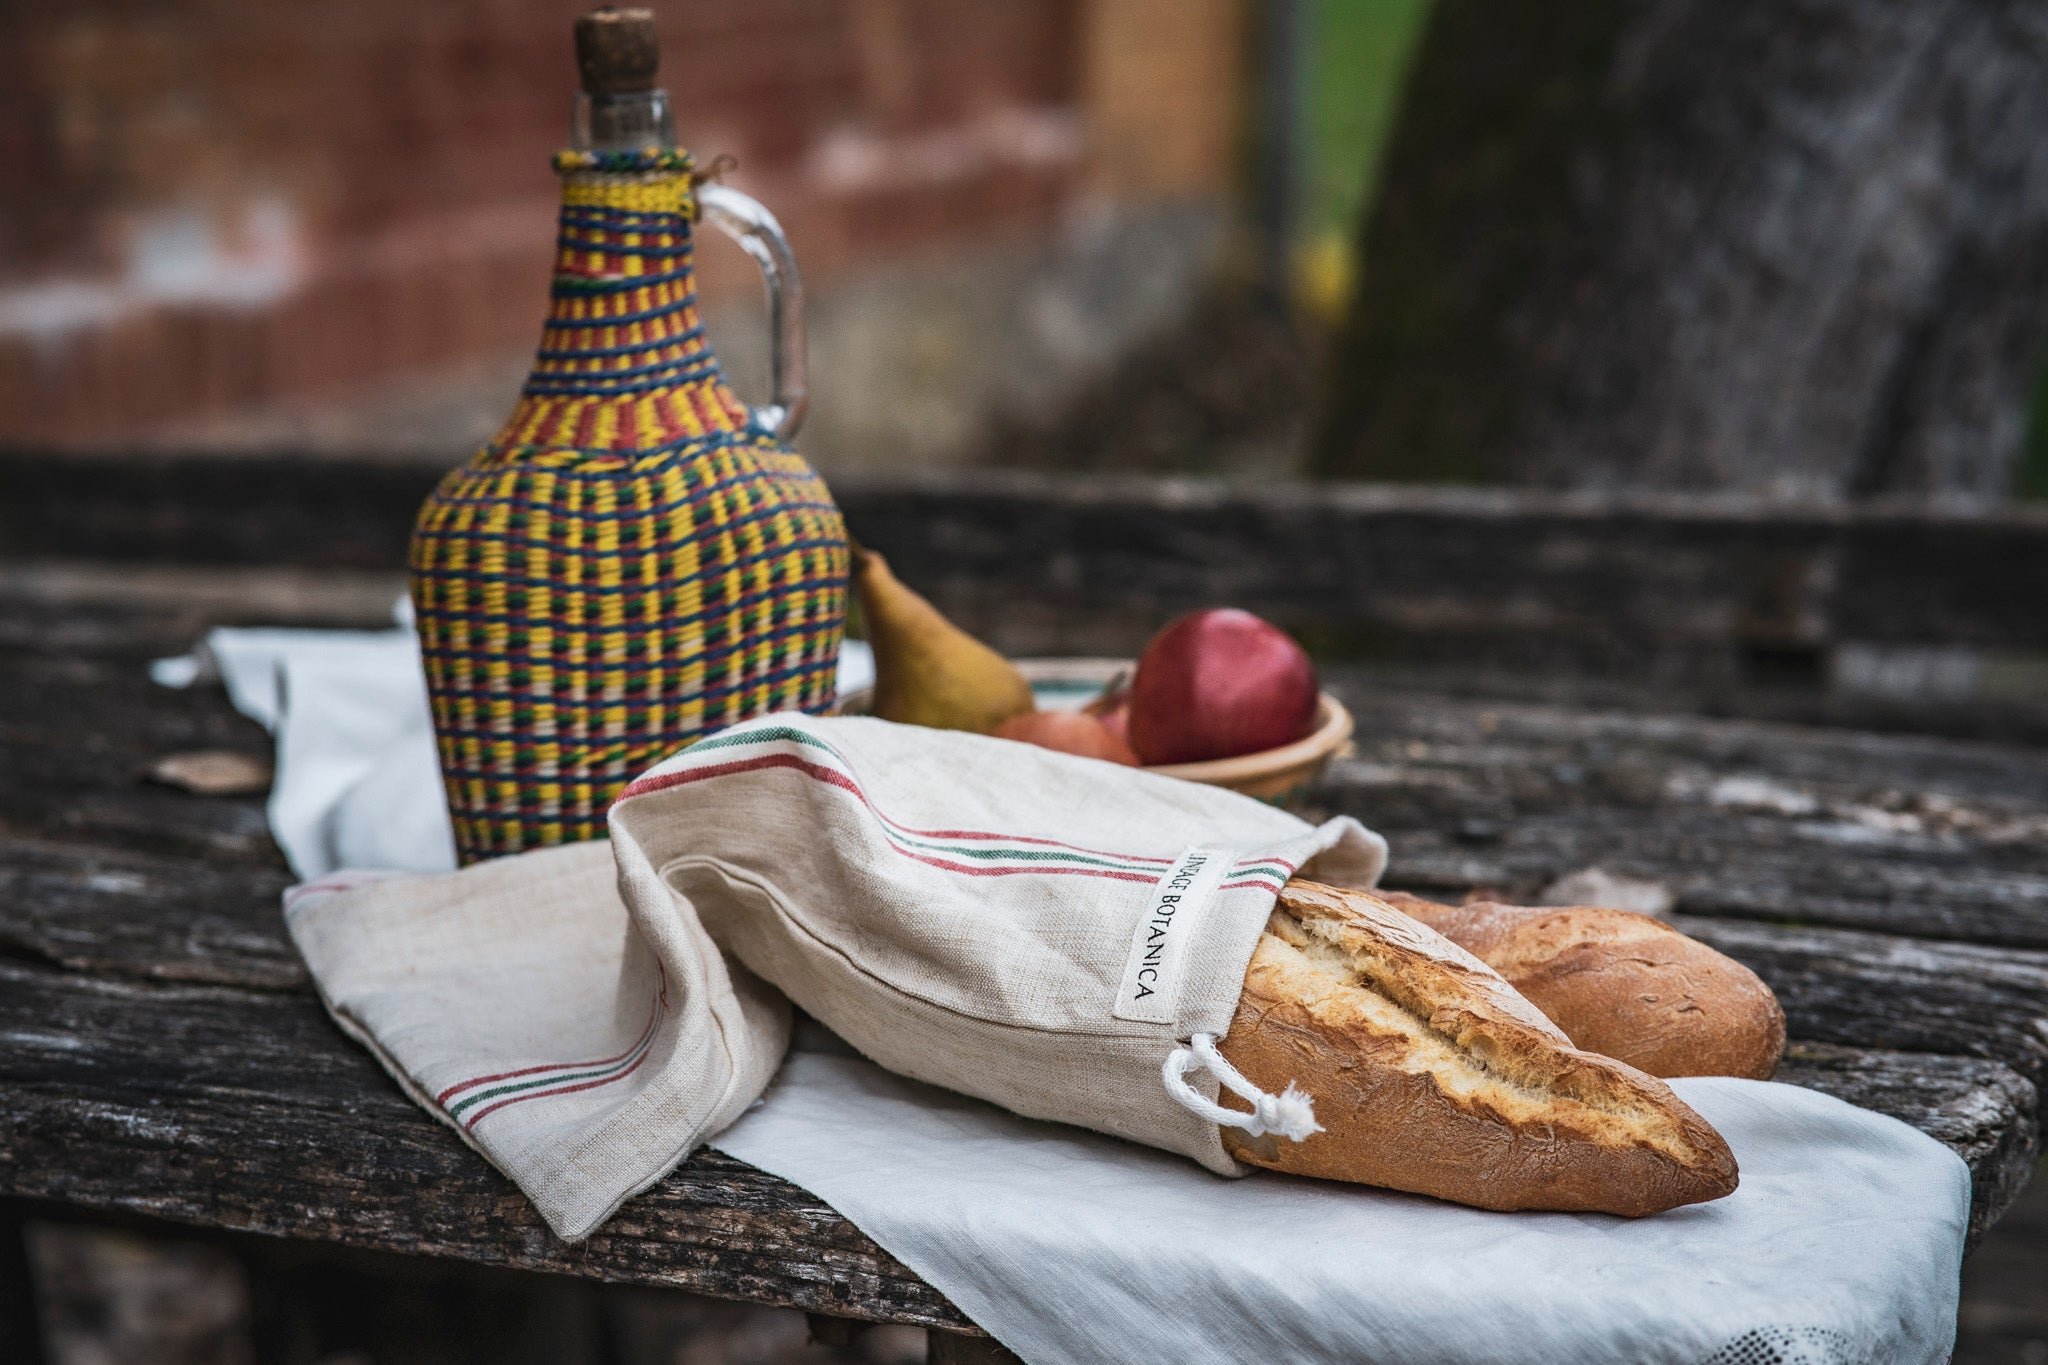 Bag: Handwoven antique and vintage hemp bread bags- BG224